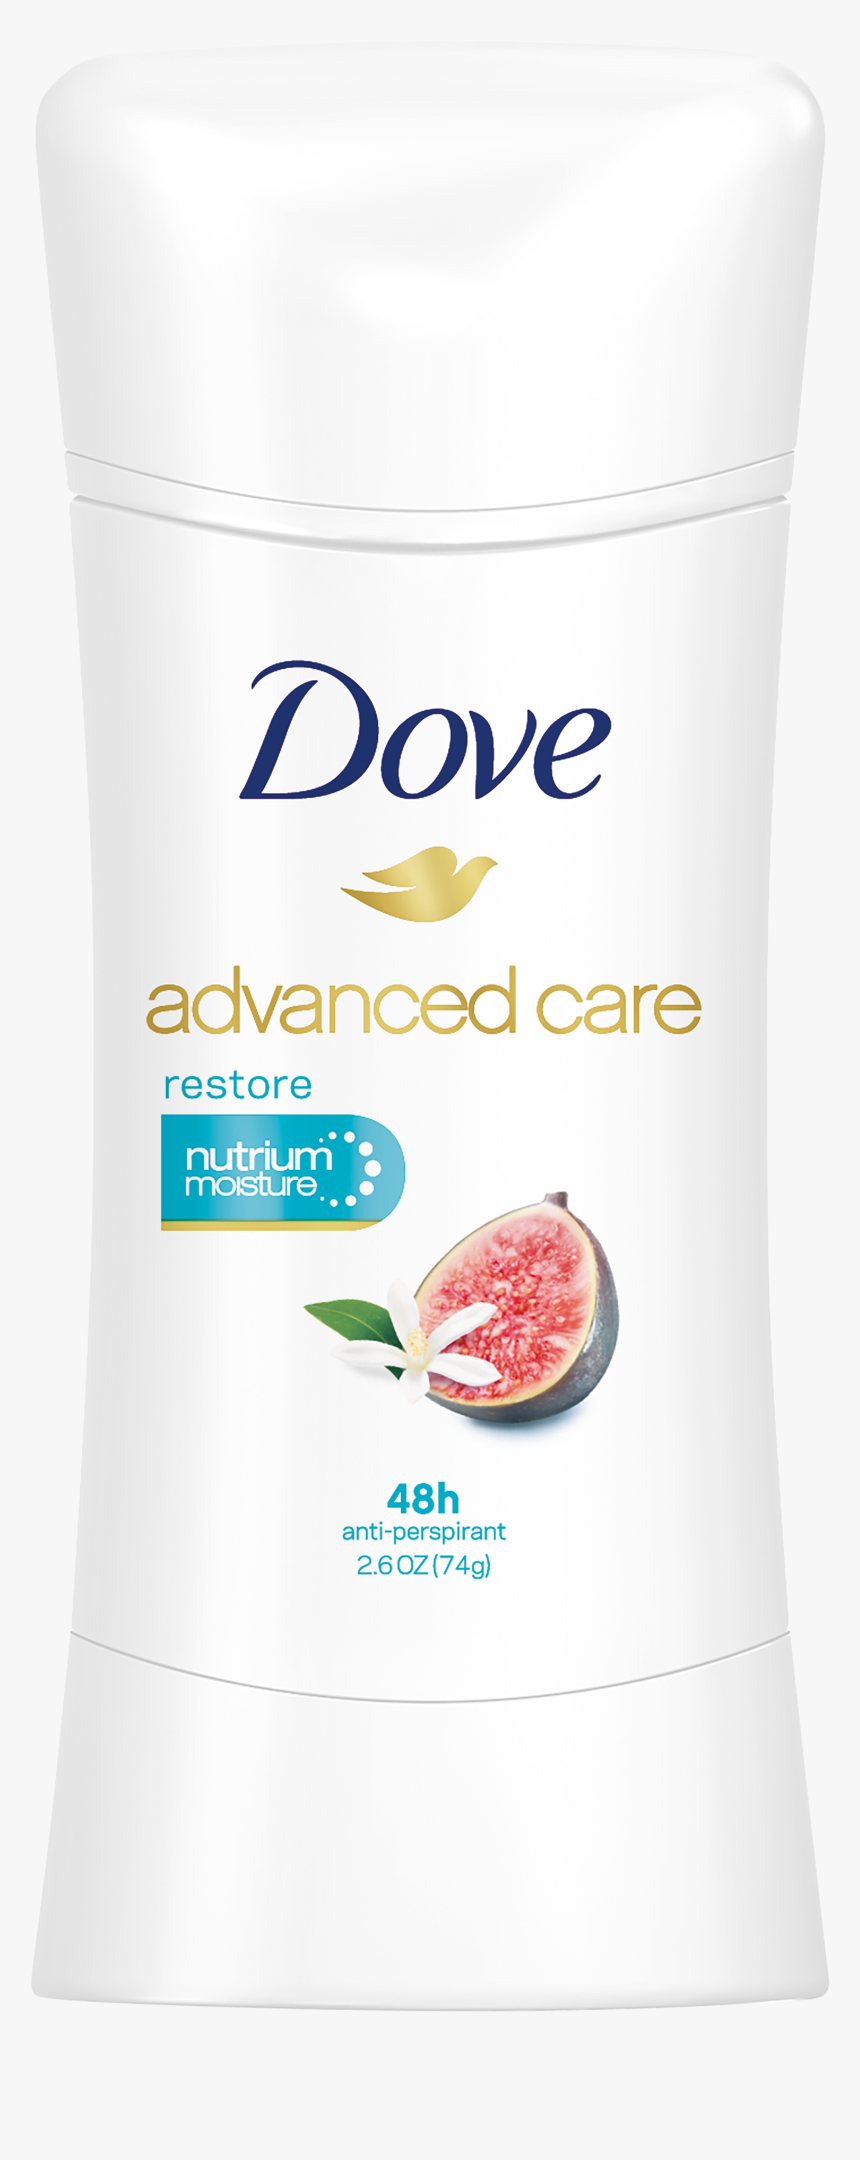 Dove Advanced Care Restore Antiperspirant, HD Png Download, Free Download